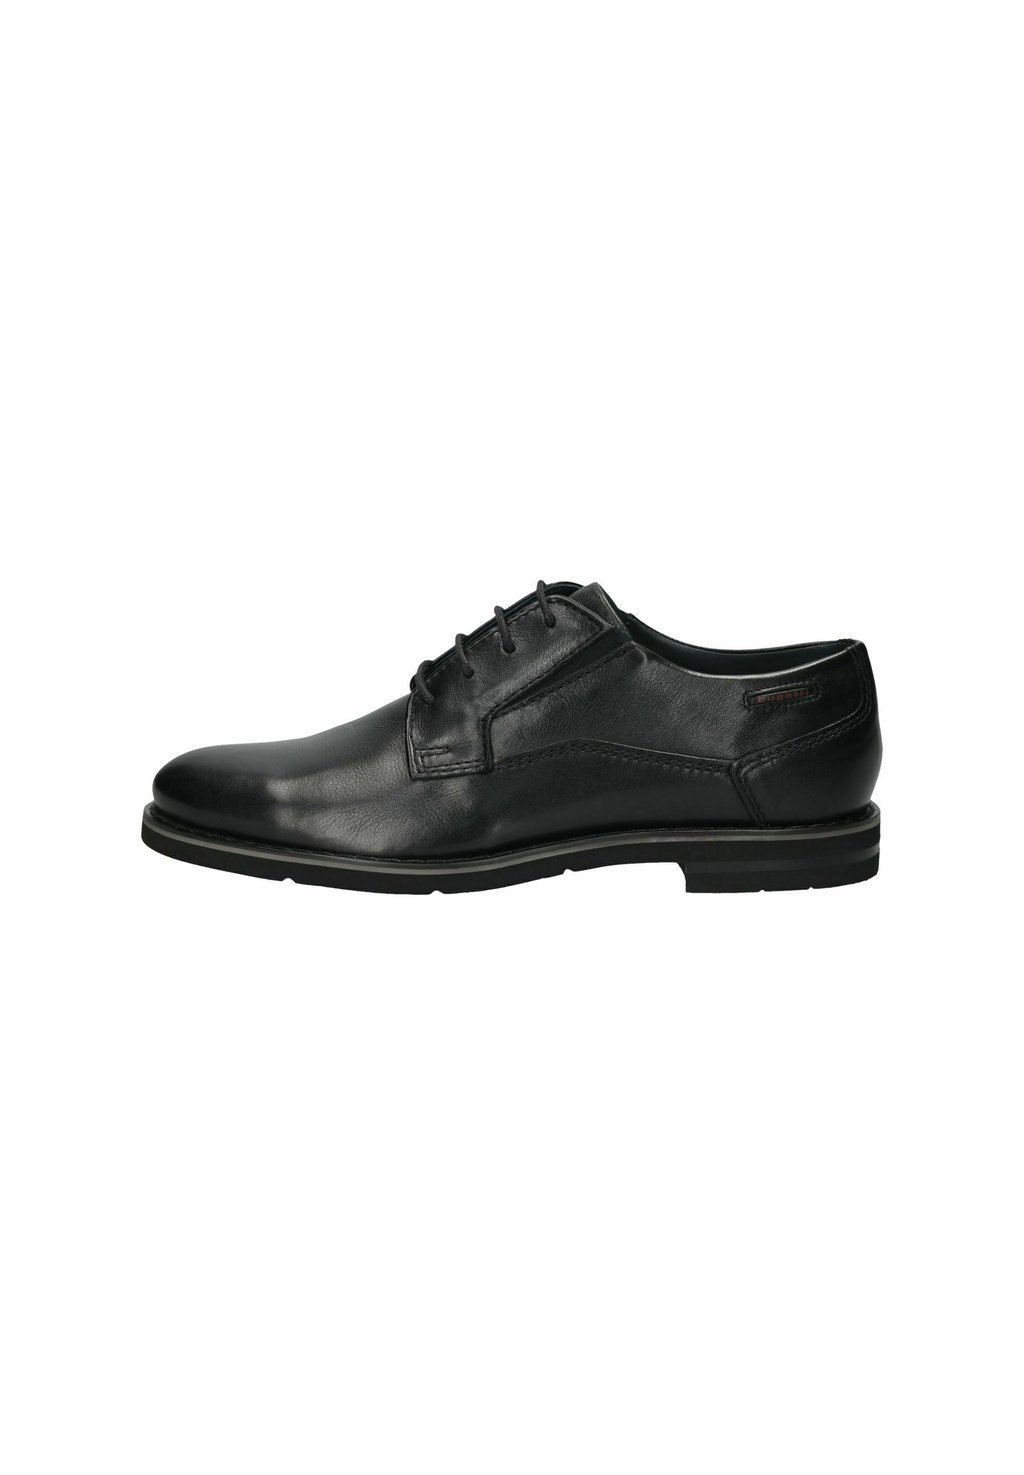 Деловые туфли на шнуровке CALEO EXKO bugatti, цвет schwarz деловые туфли на шнуровке bugatti цвет black